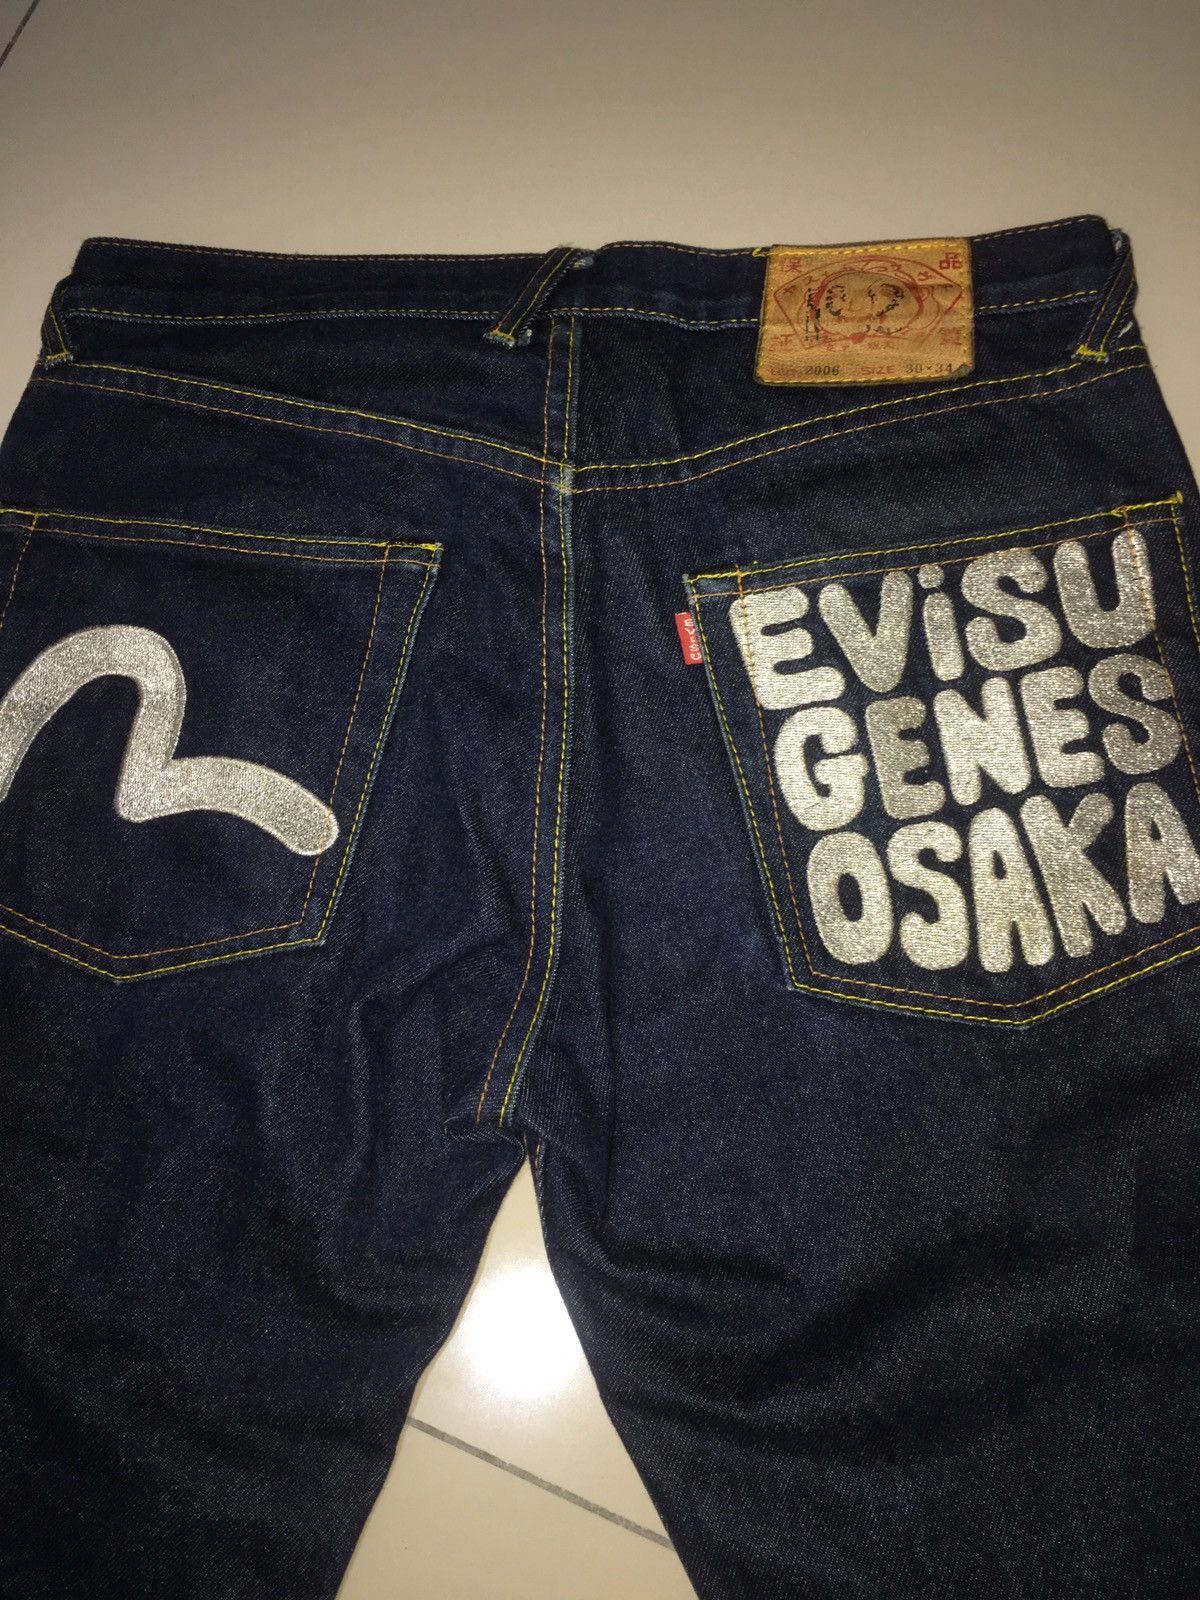 Evisu 🔥LAST DROP PRICE🔥Evisu Genes Osaka Denim Long Pants Size US 32 / EU 48 - 3 Thumbnail